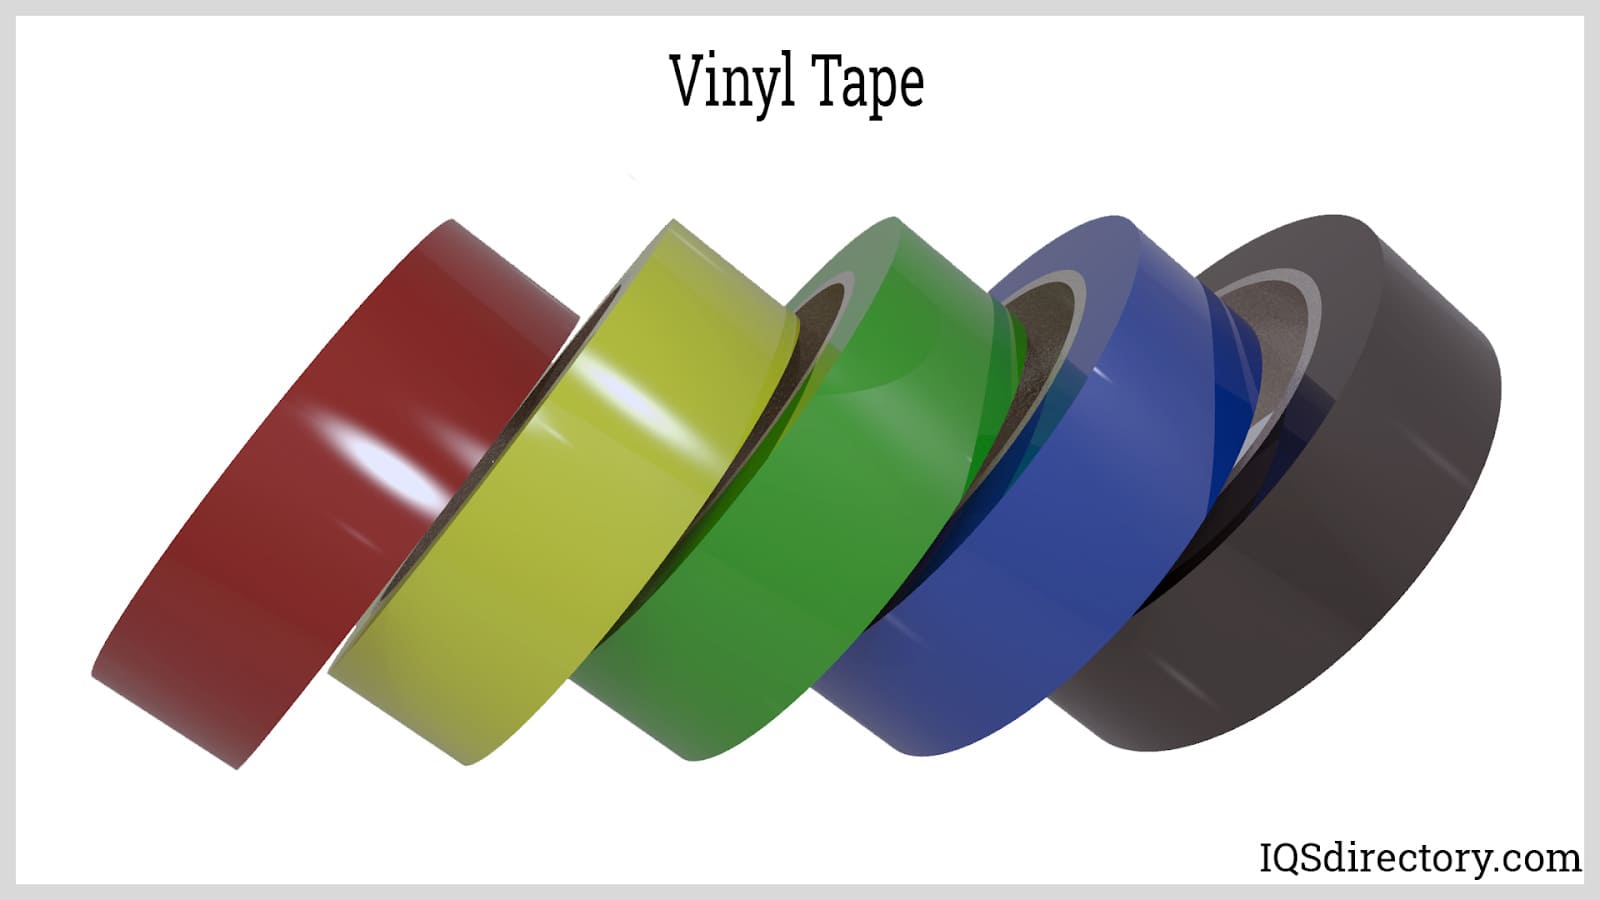 Vinyl tape